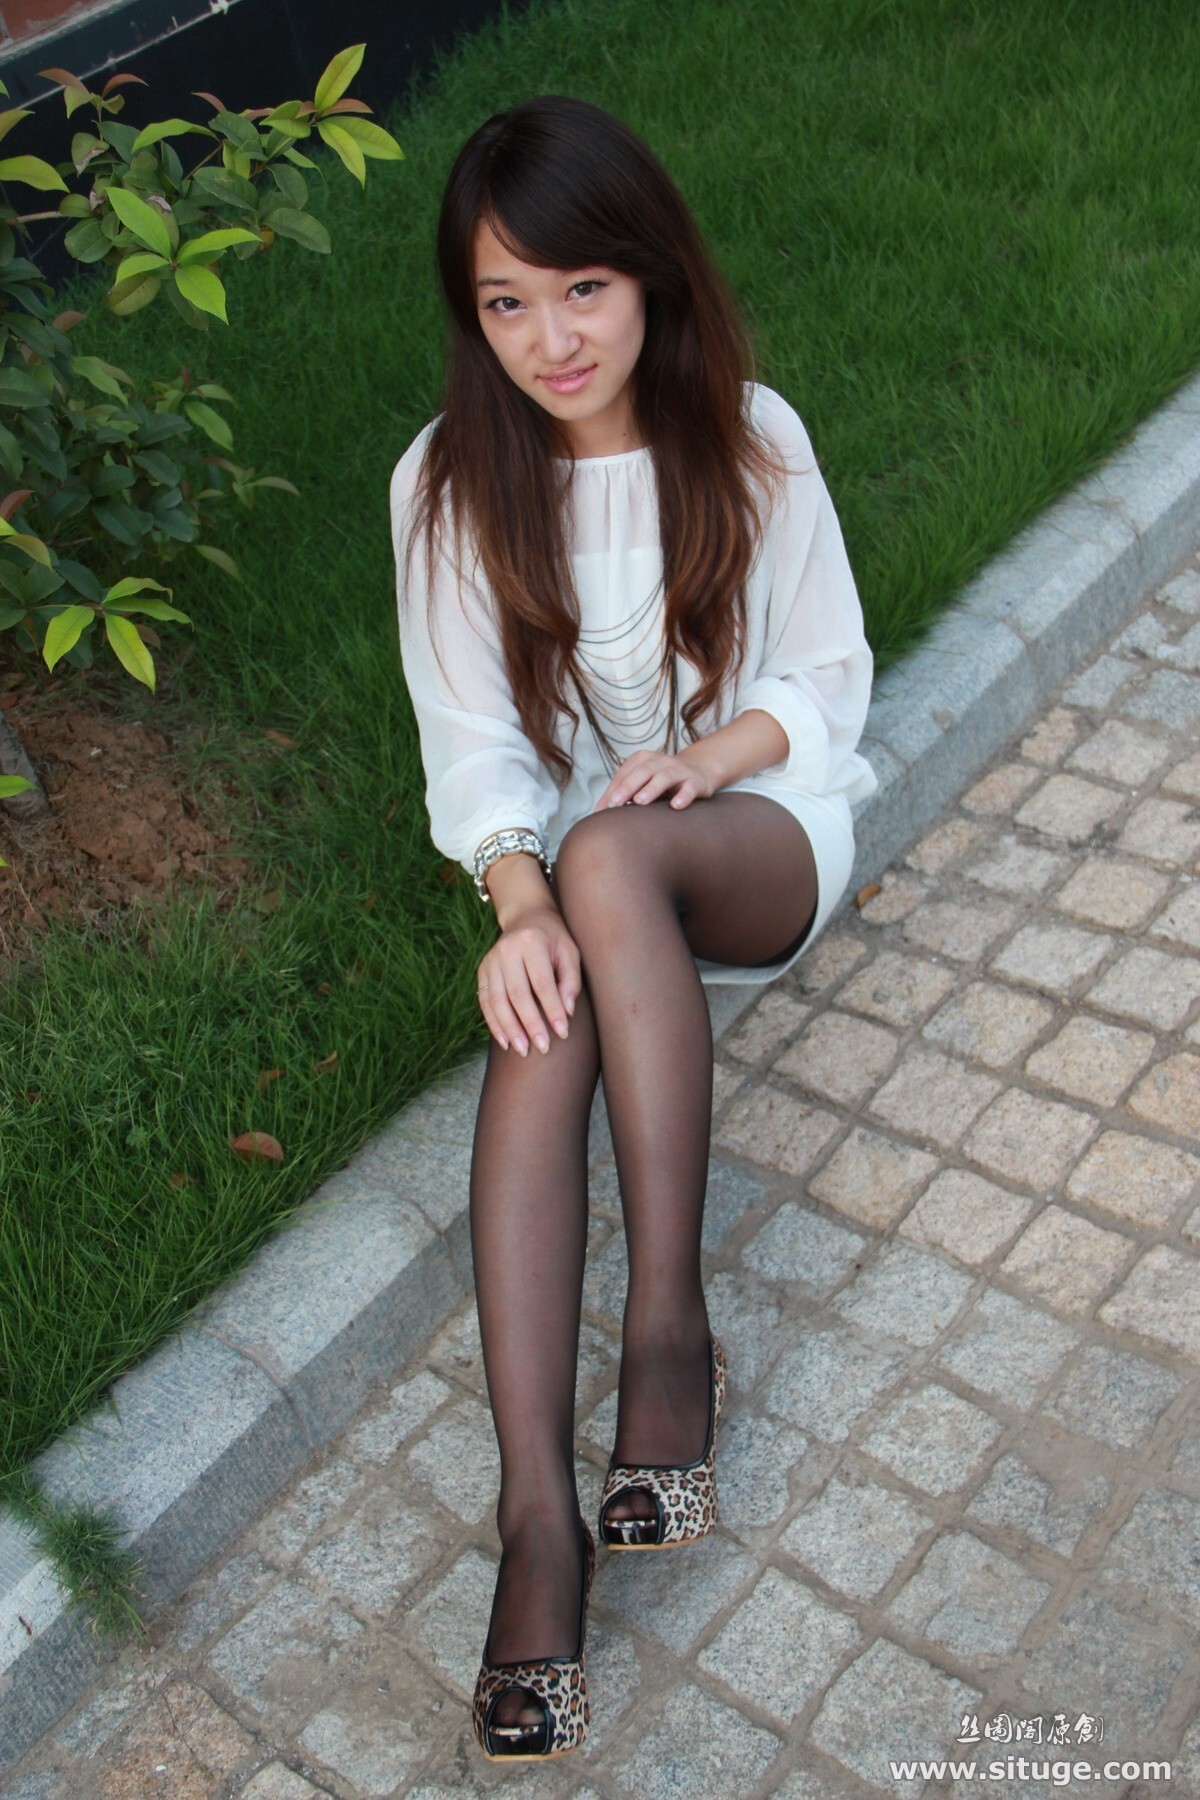 Situge STG no.029 Wenzhen full set of leg silk stockings